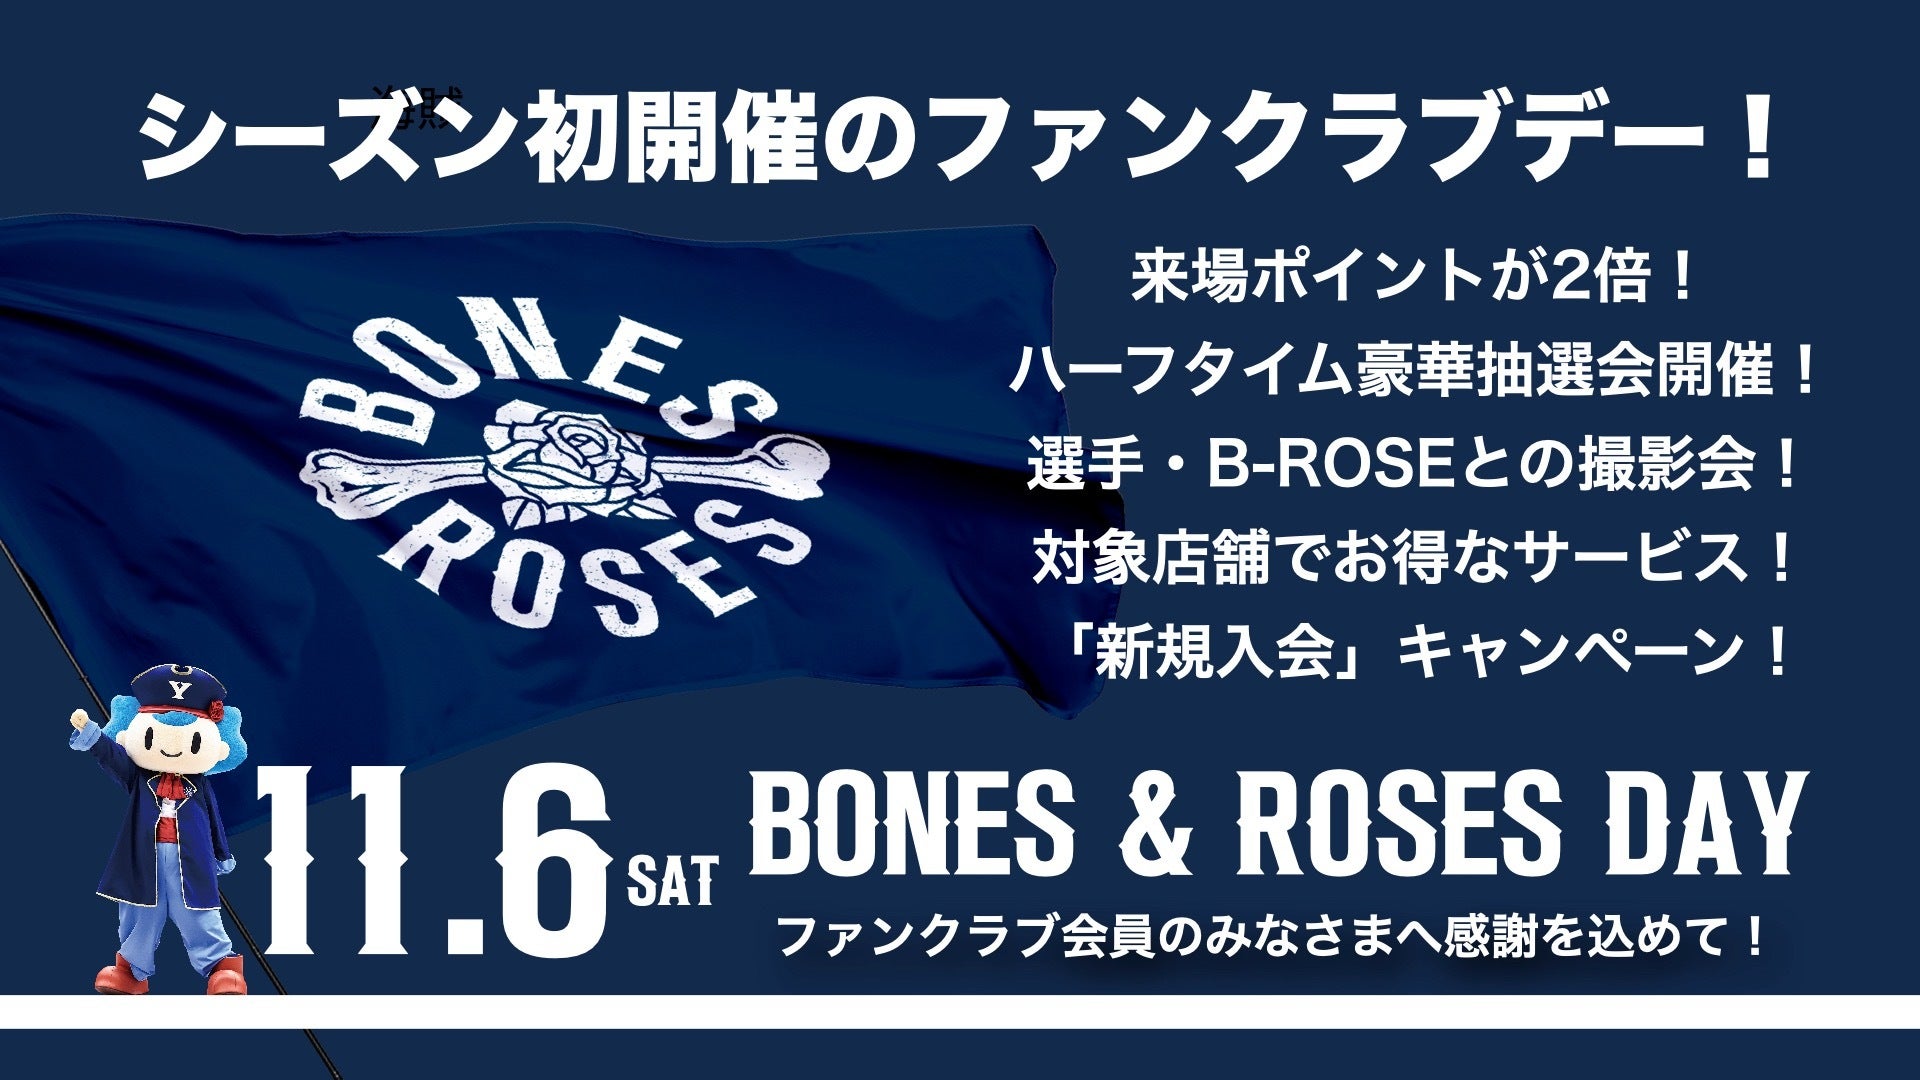 BONES & ROSES DAY!